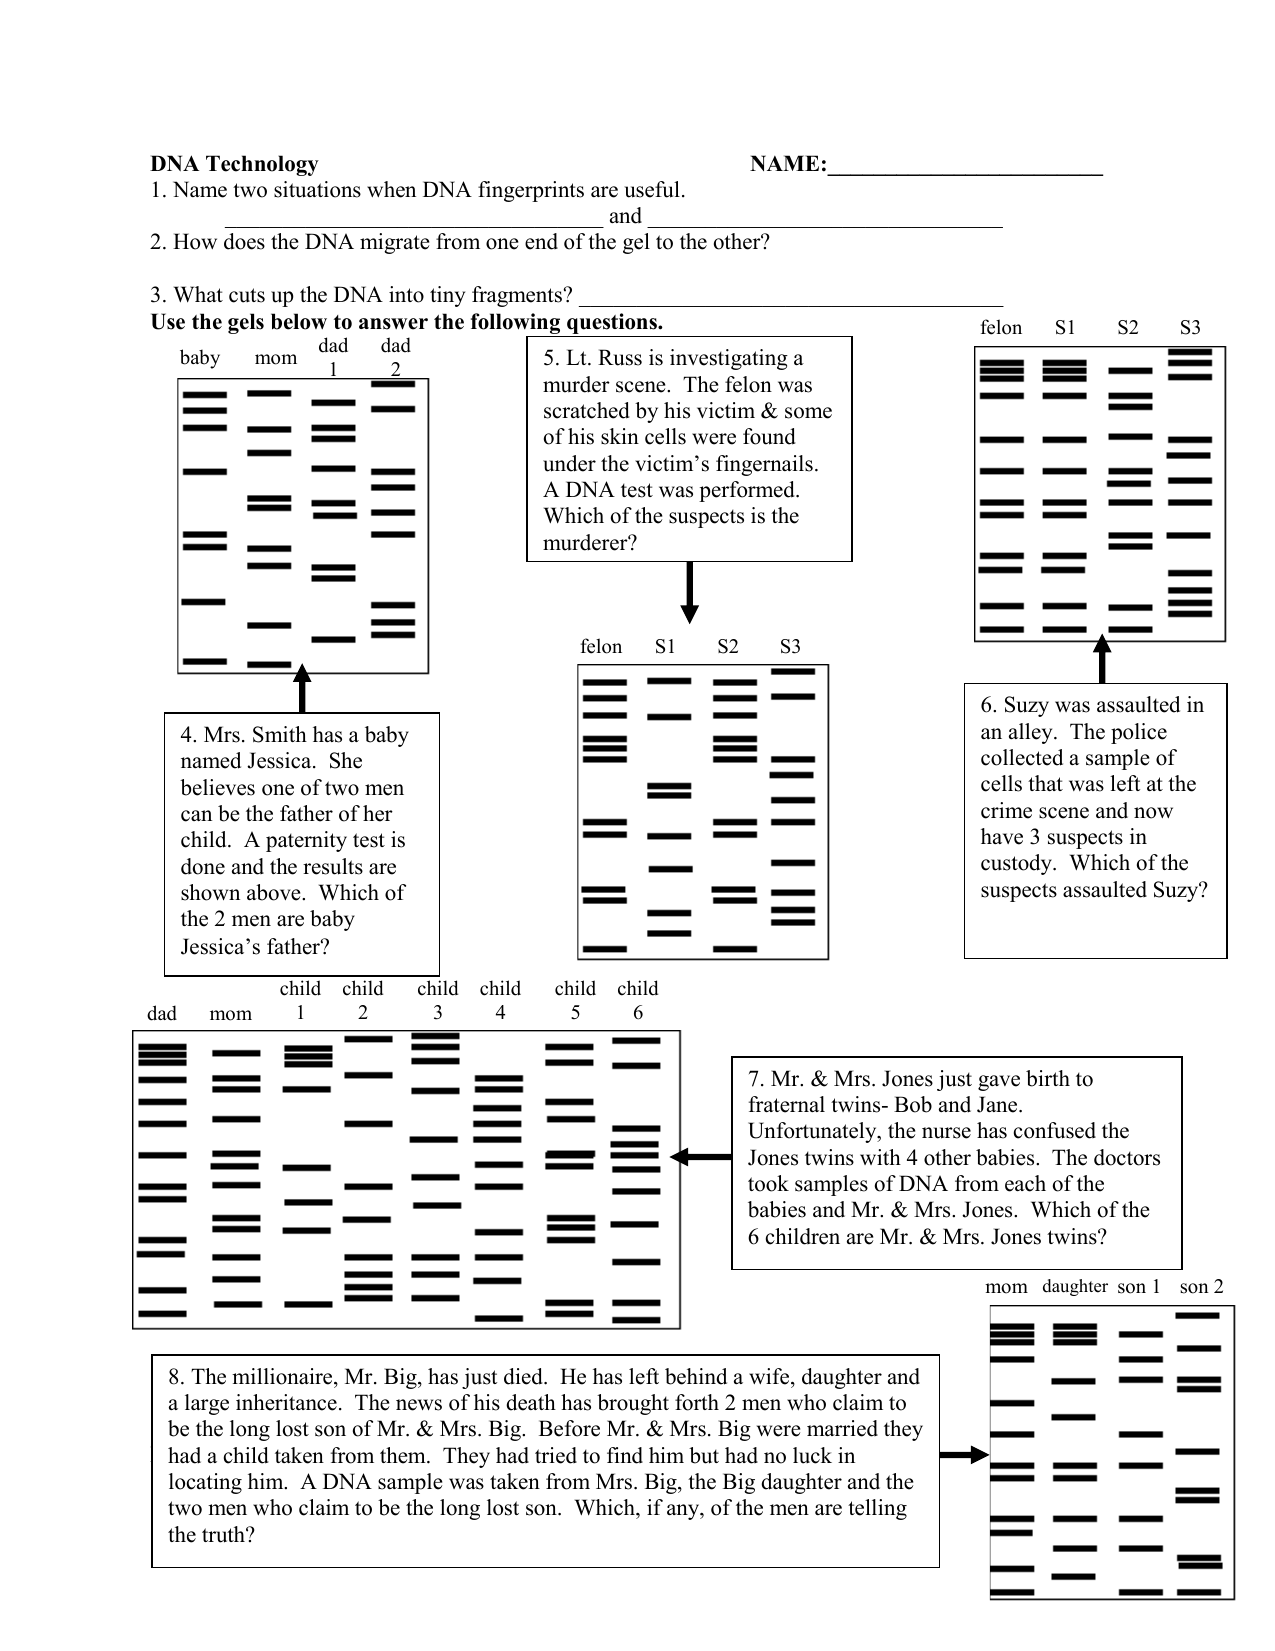 DNA Technology Worksheet Regarding Dna Fingerprinting Worksheet Answers